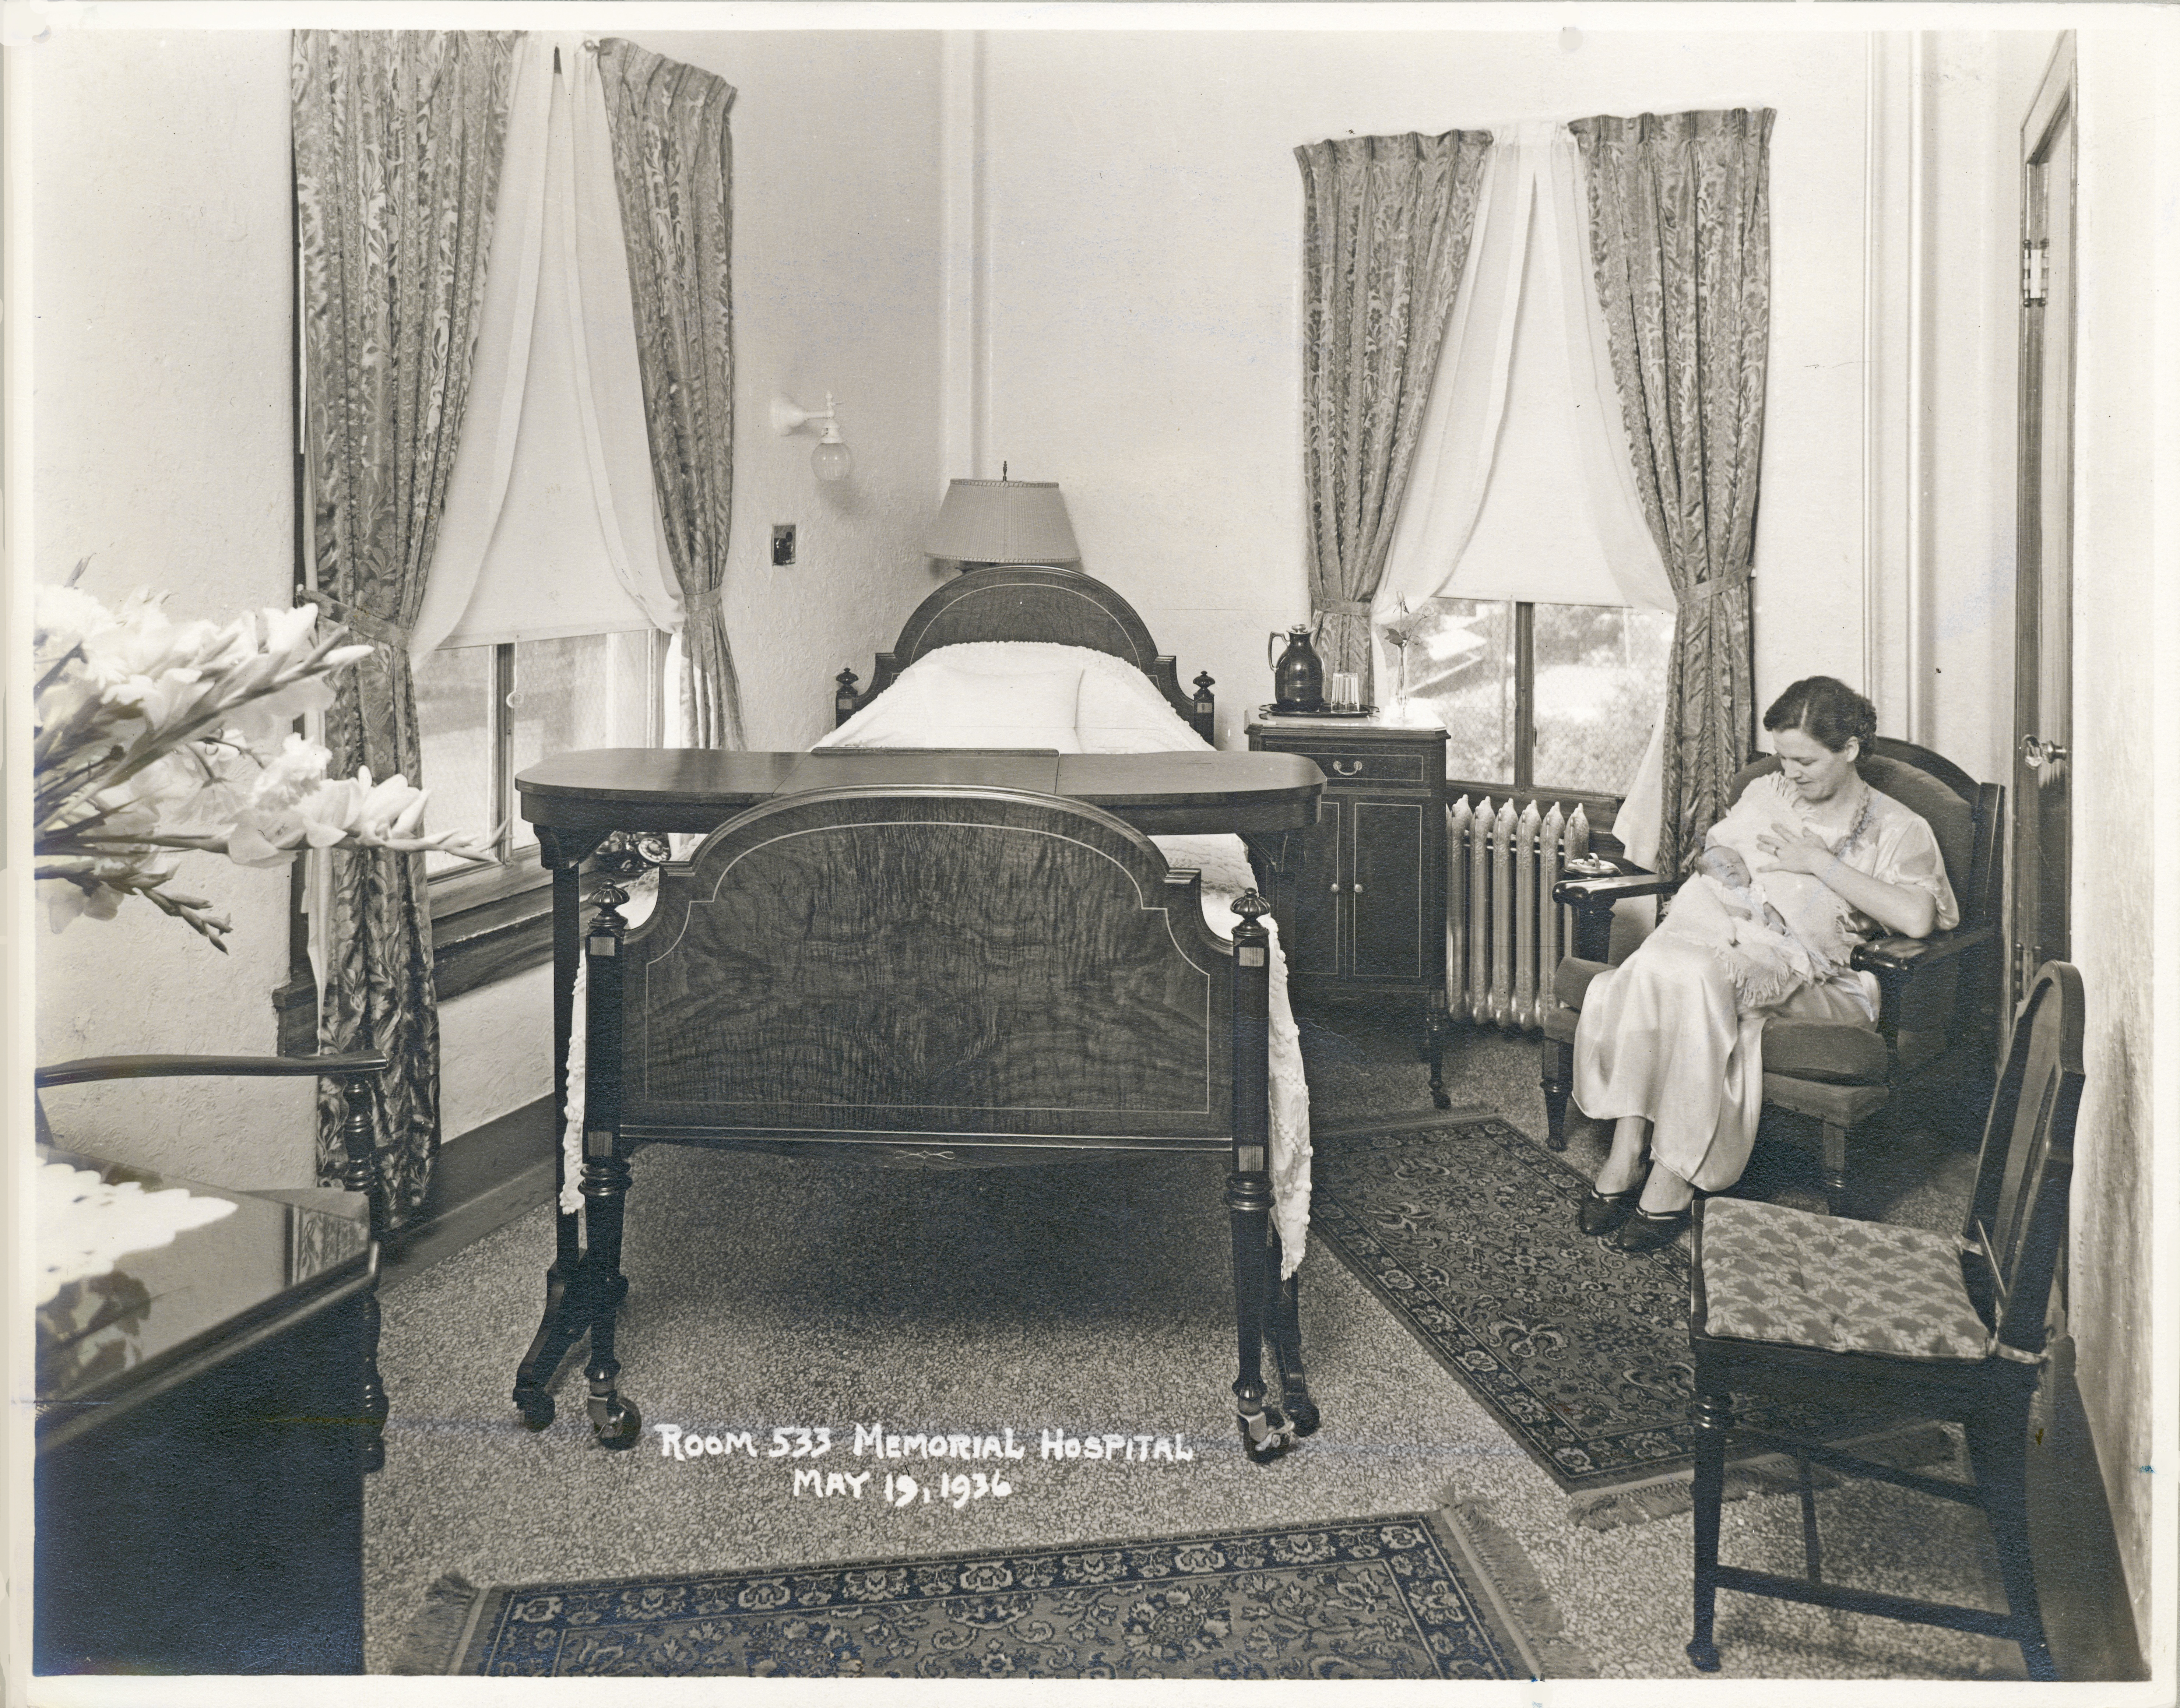 P-451 Memorial maternity room 1936 600dpi JPG